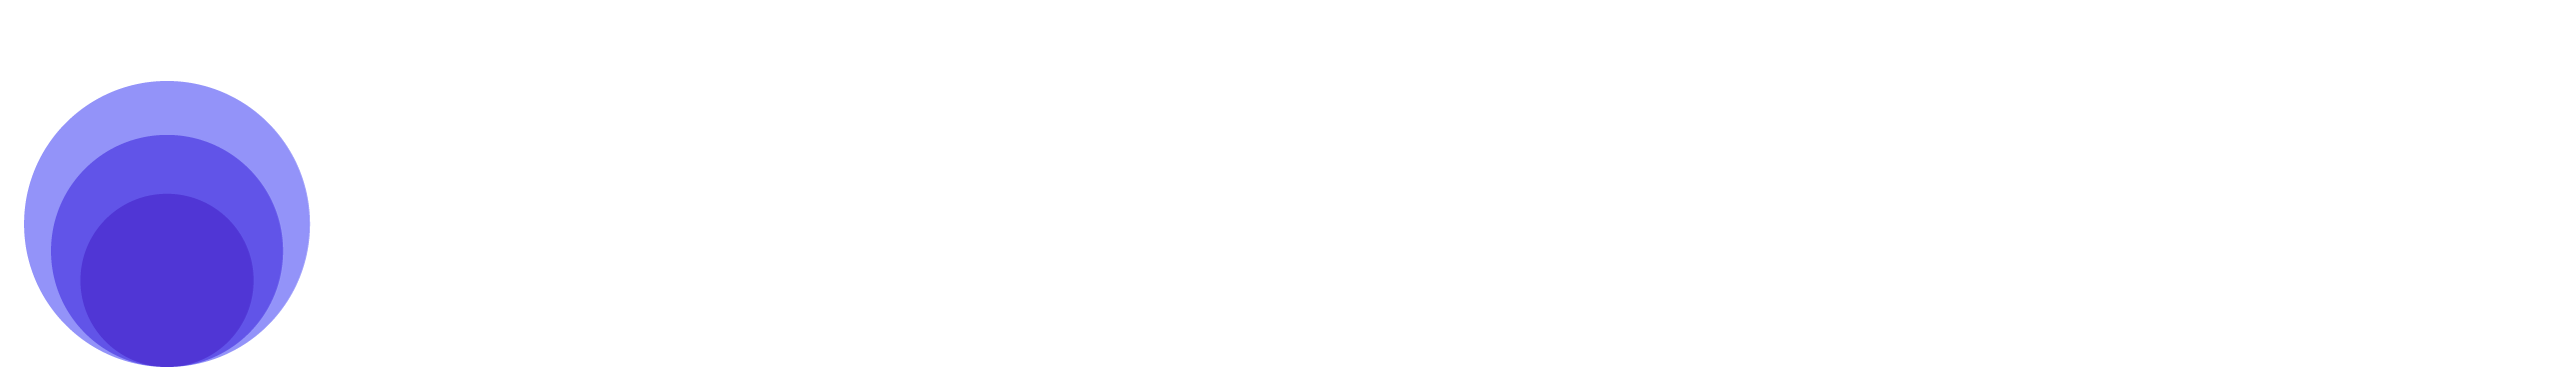 Alliance logo 12